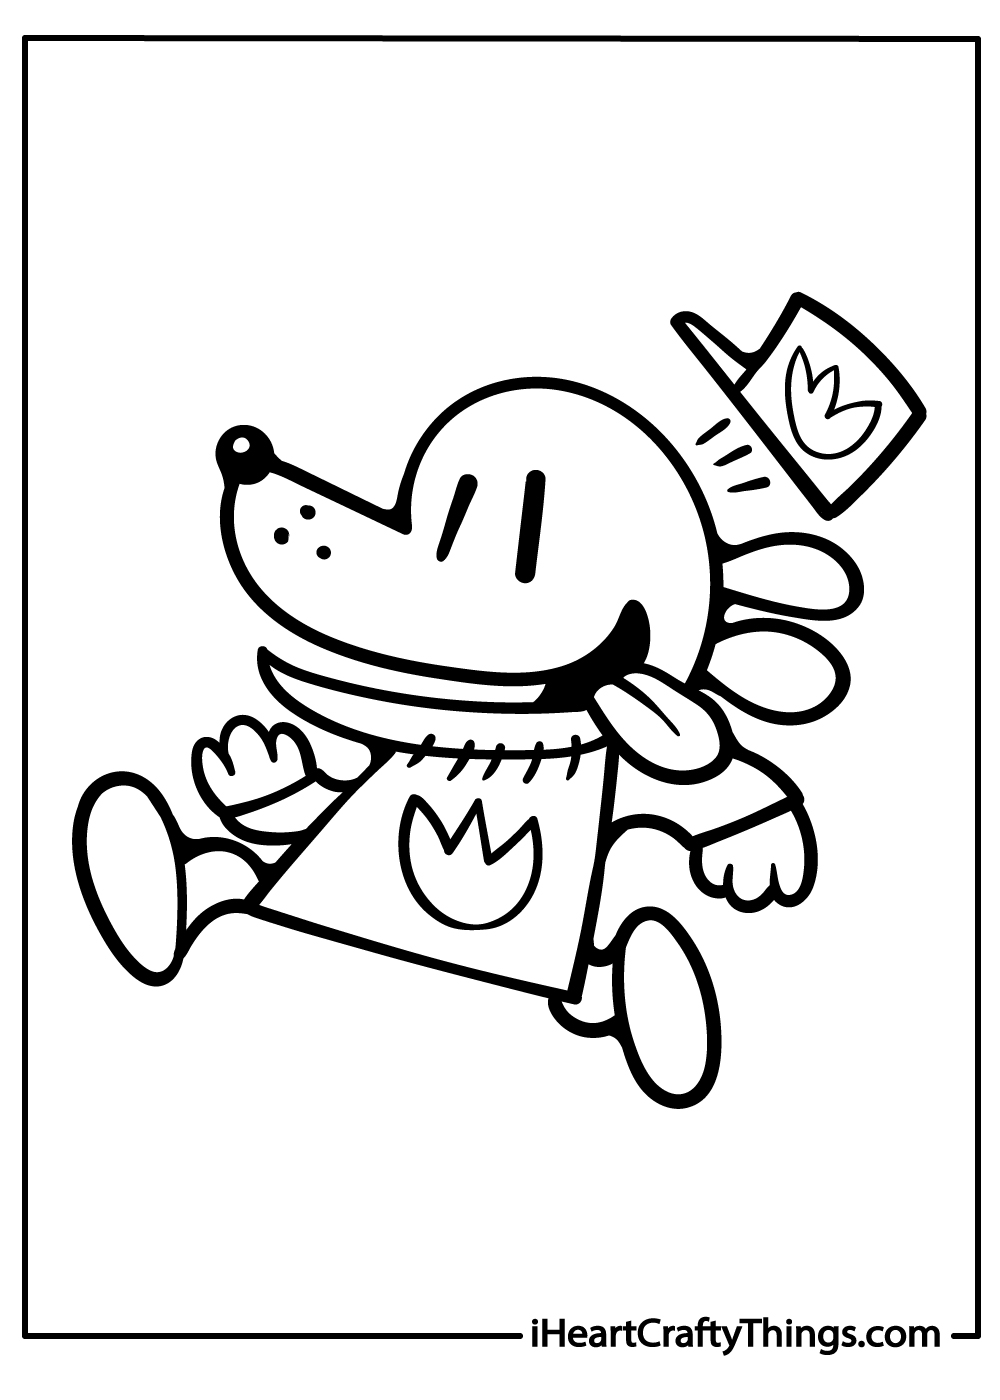 original dog man coloring pages